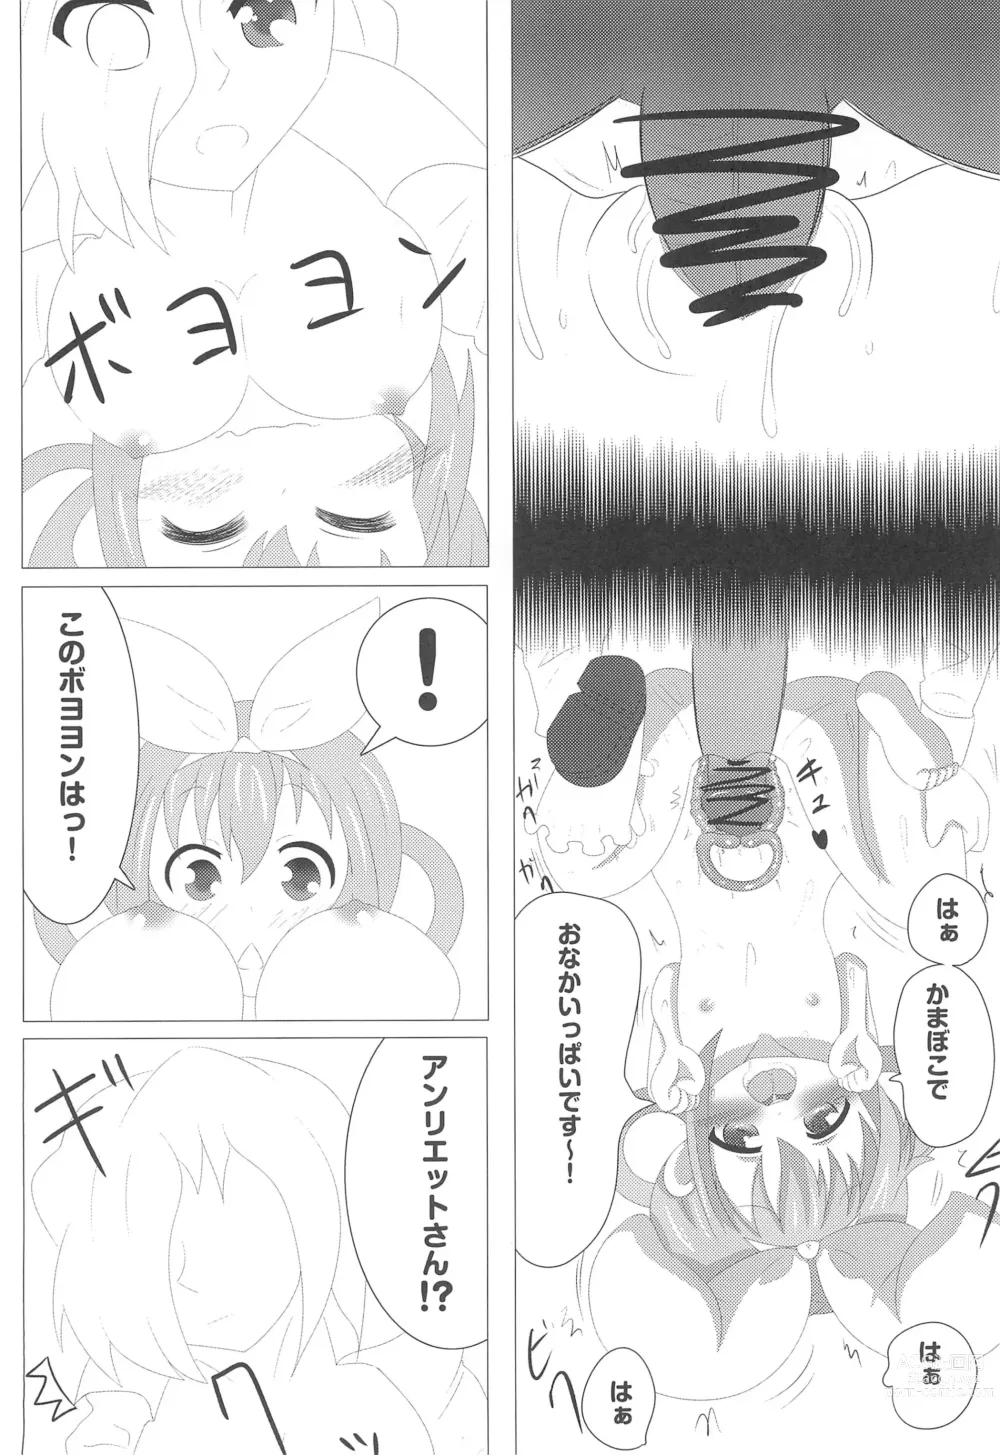 Page 16 of doujinshi Semen-ya-san de Arubaito